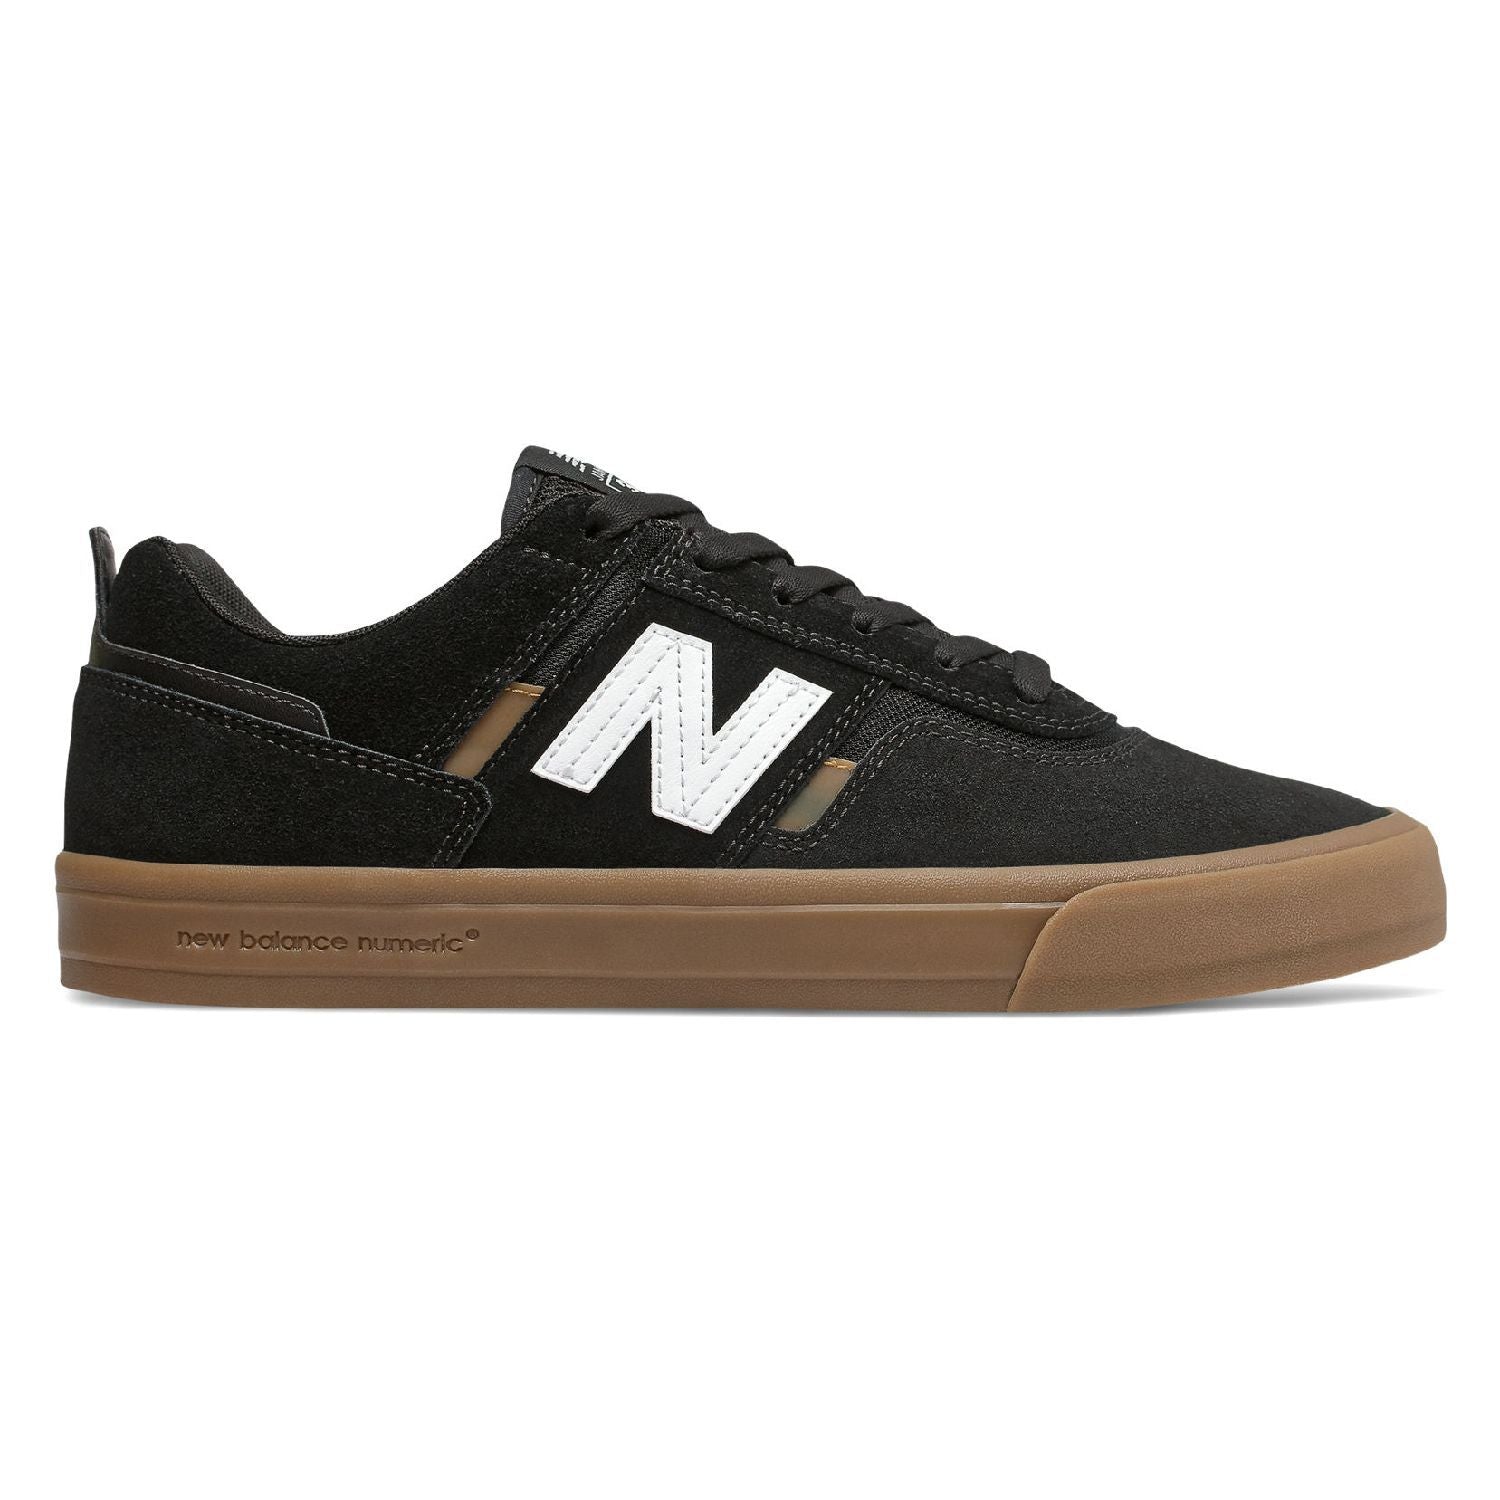 Black/Gum Jamie Foy NM306BGM New Balance Numeric Skate Shoe